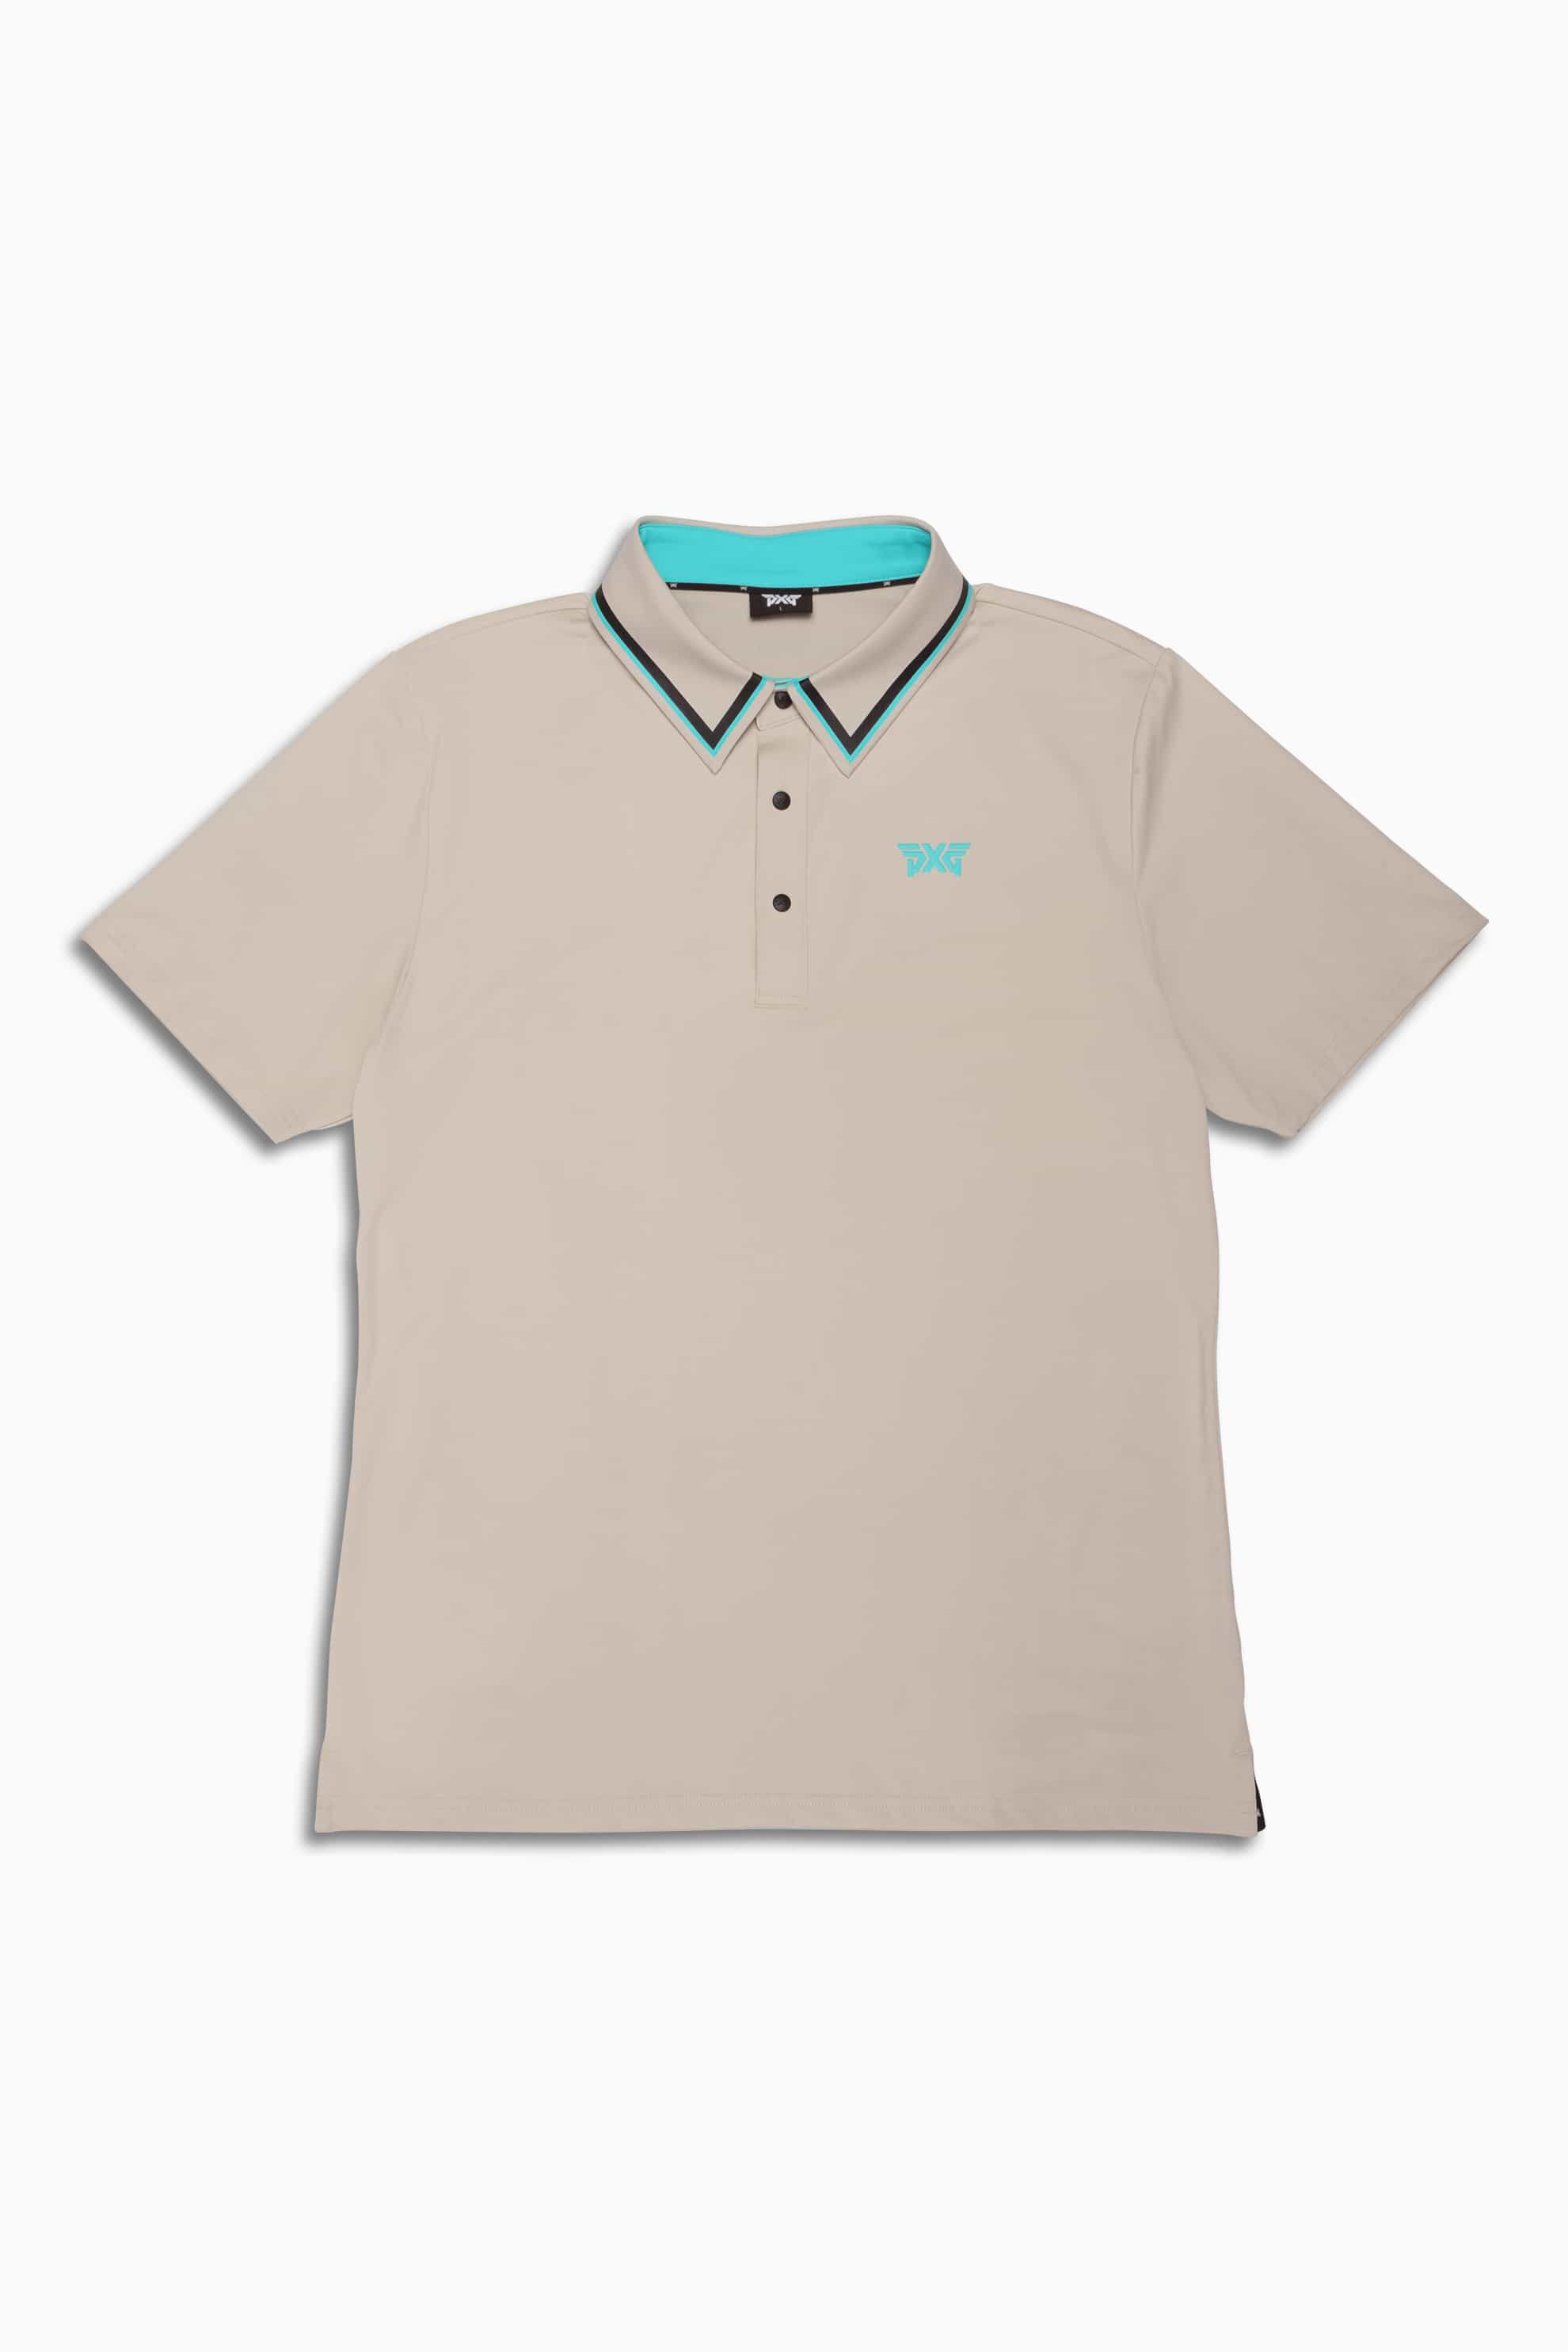 Shop Men's Golf ポロシャツ - Comfort and Athletic Fit | PXG JP